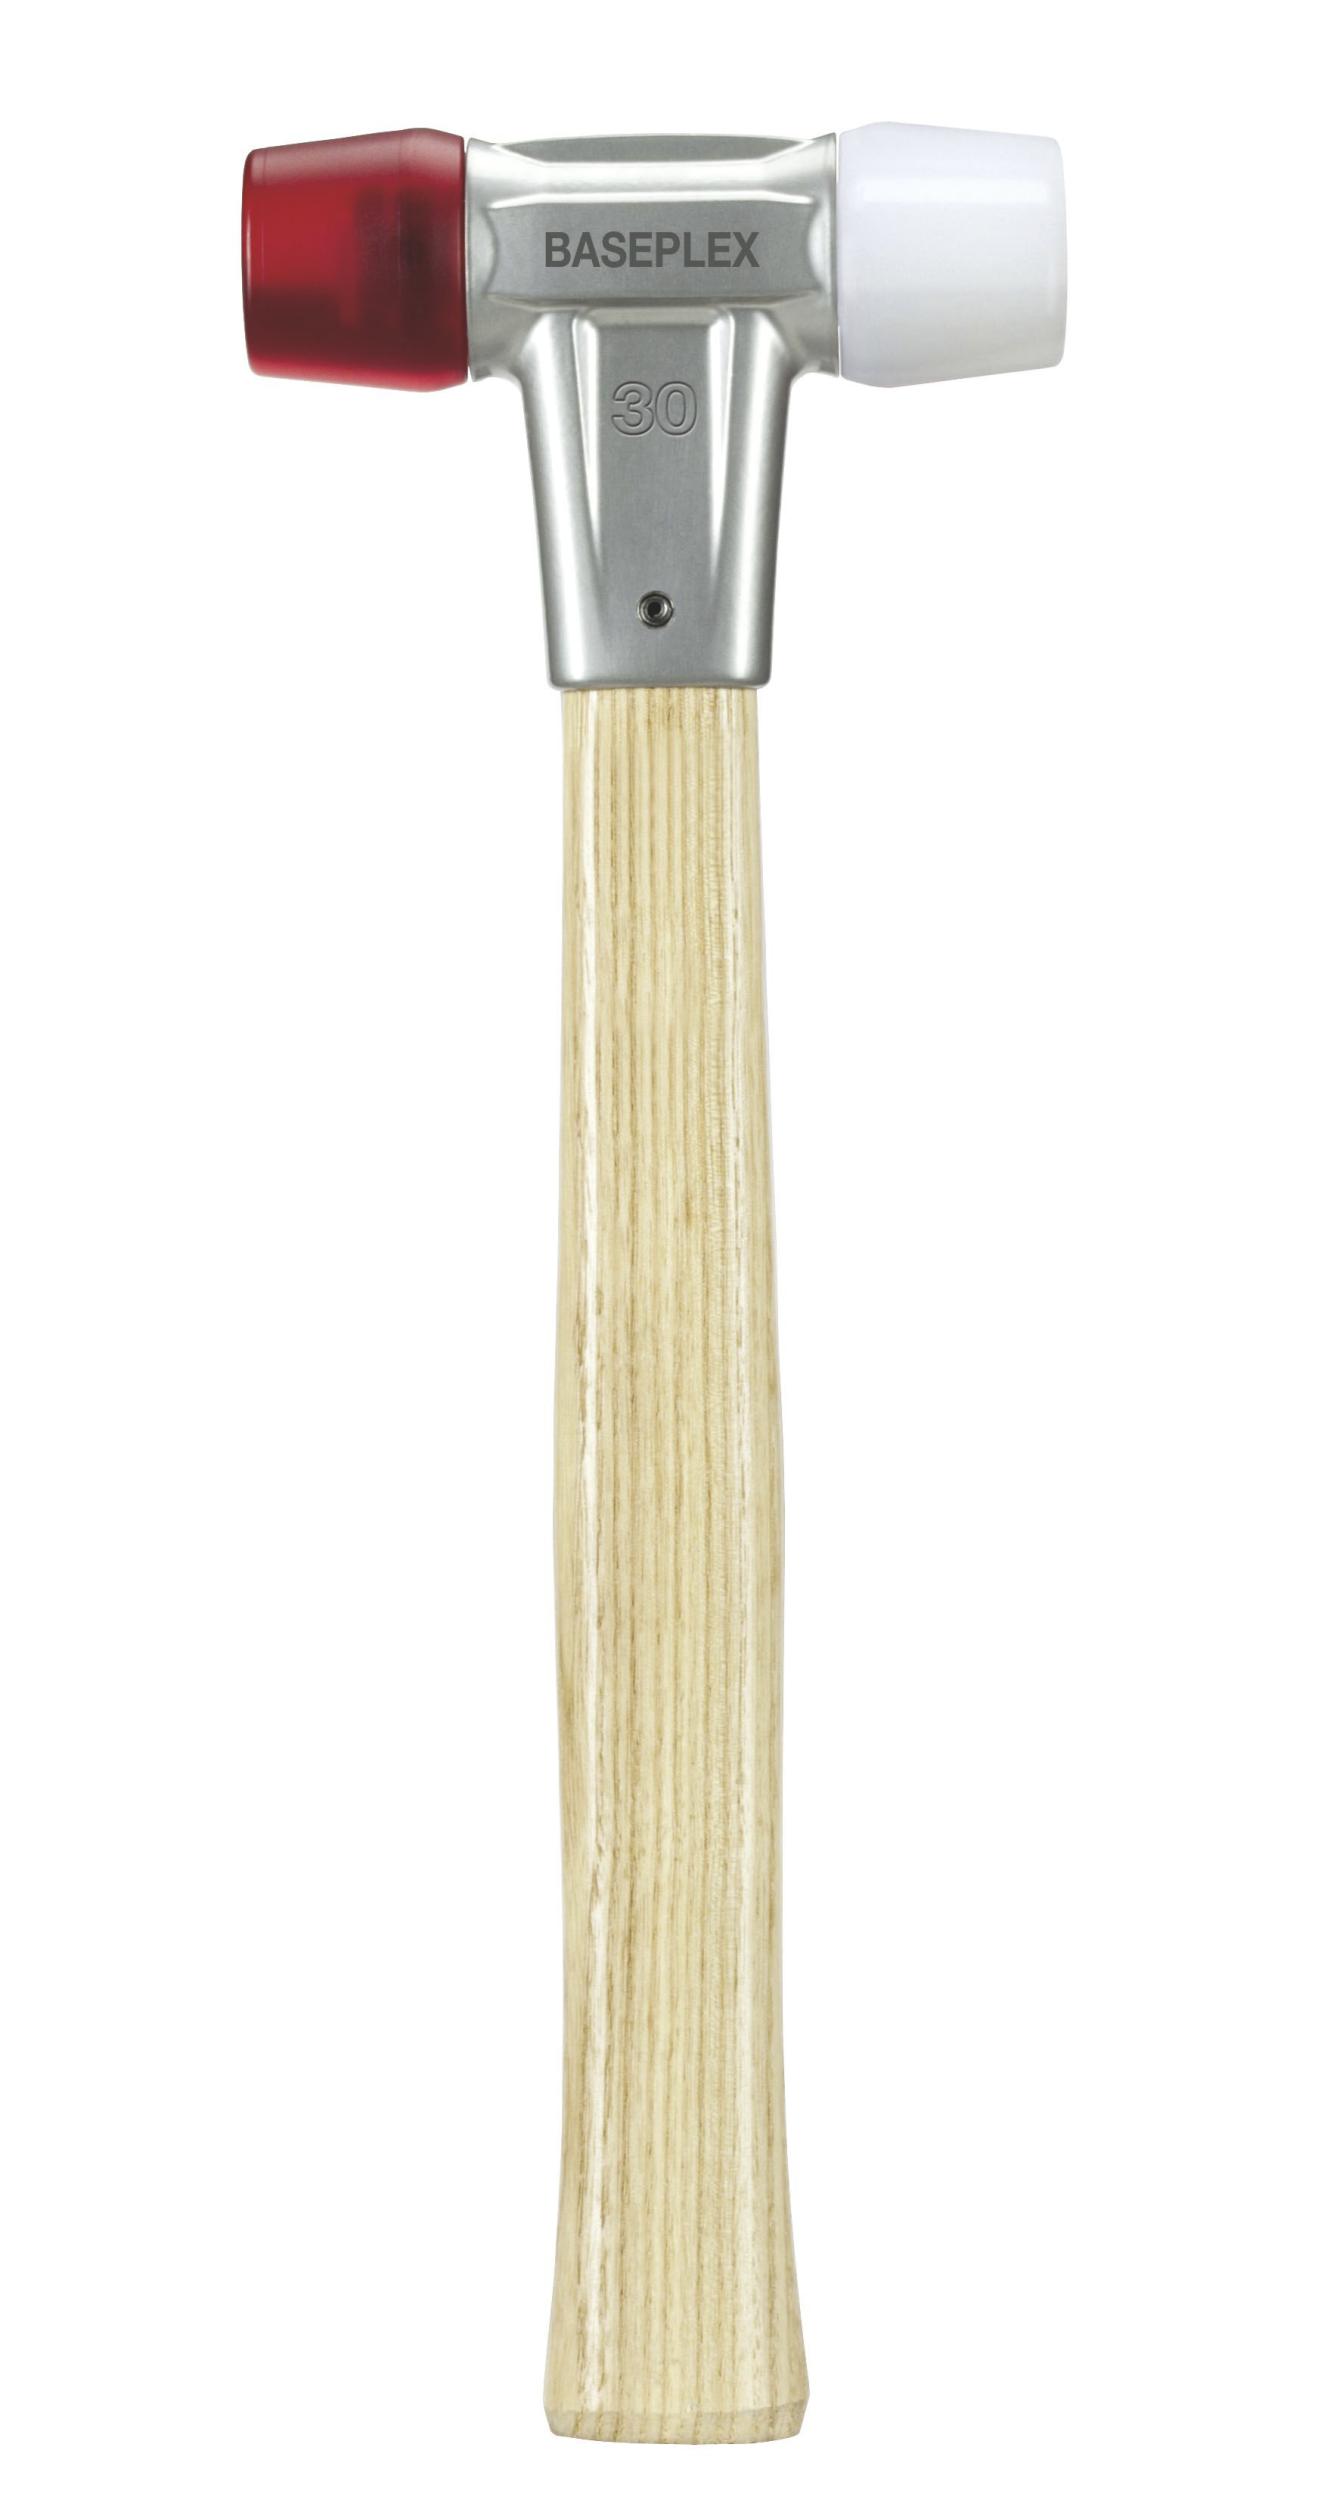 Halder Schonhammer 25 mm, ca. 240 g, Gesamtlänge 270 mm, Kopflänge 86 mm